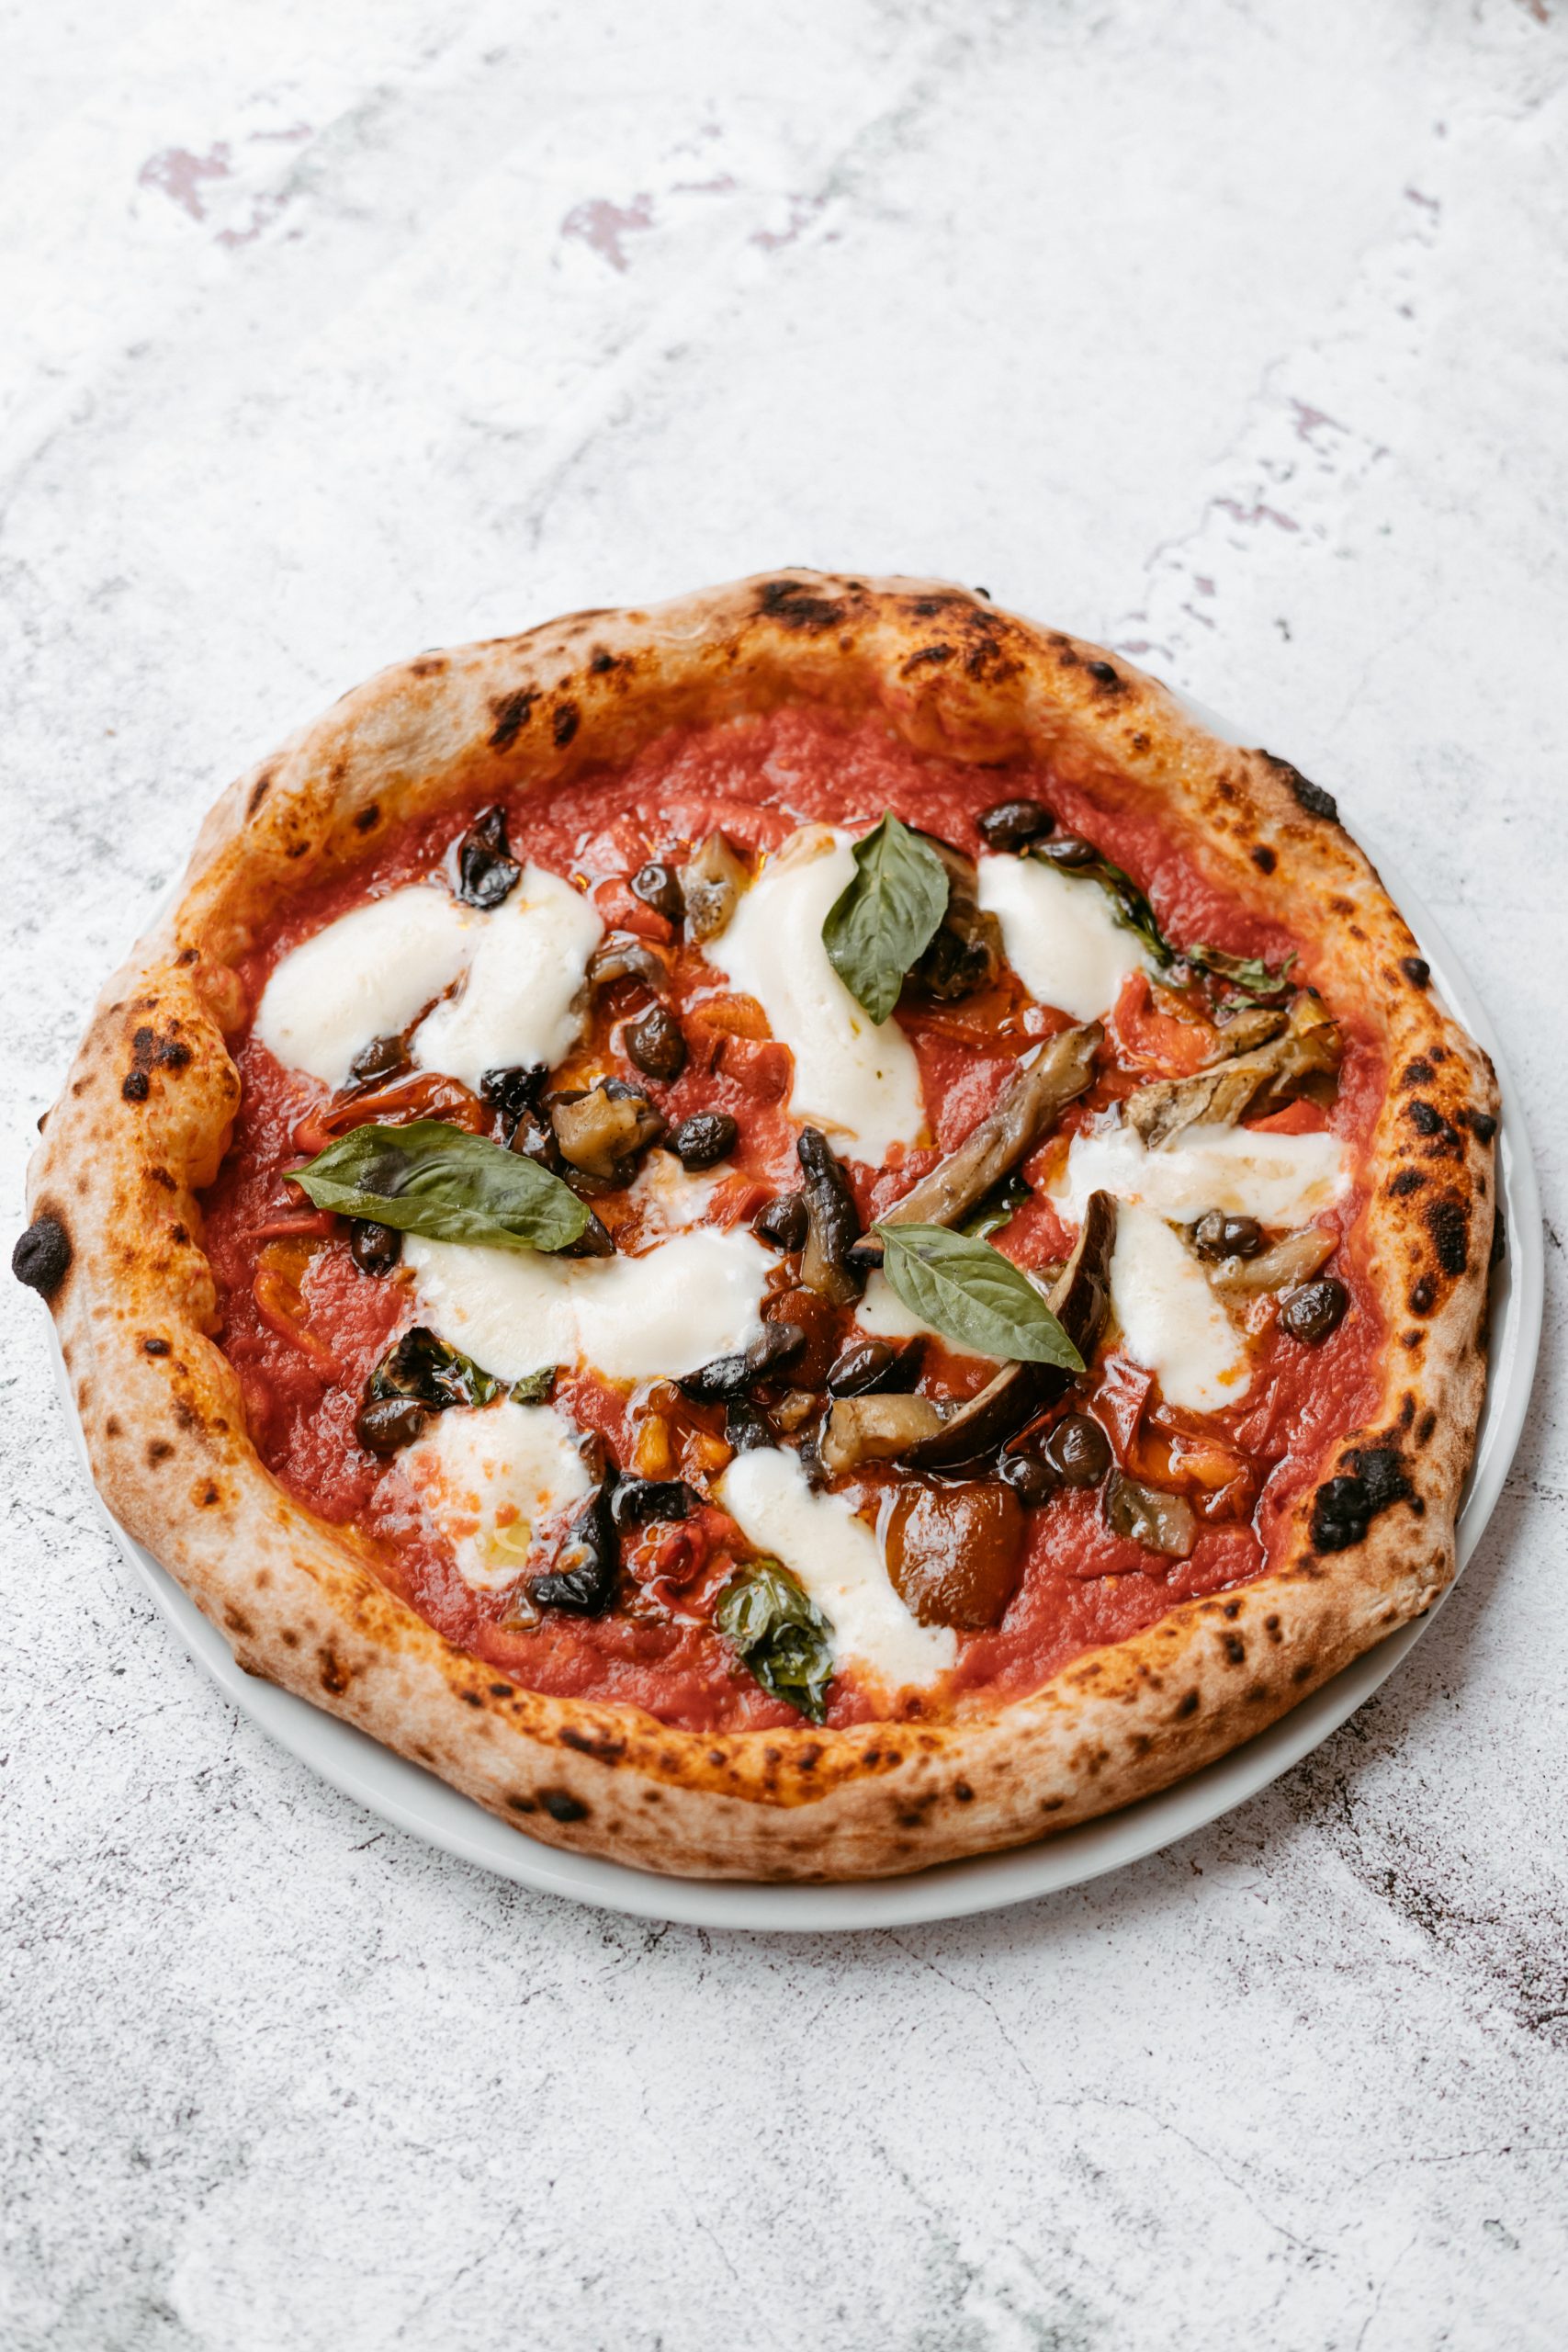 the pizza vagabond - Italian restaurant amsterdam for best pizza